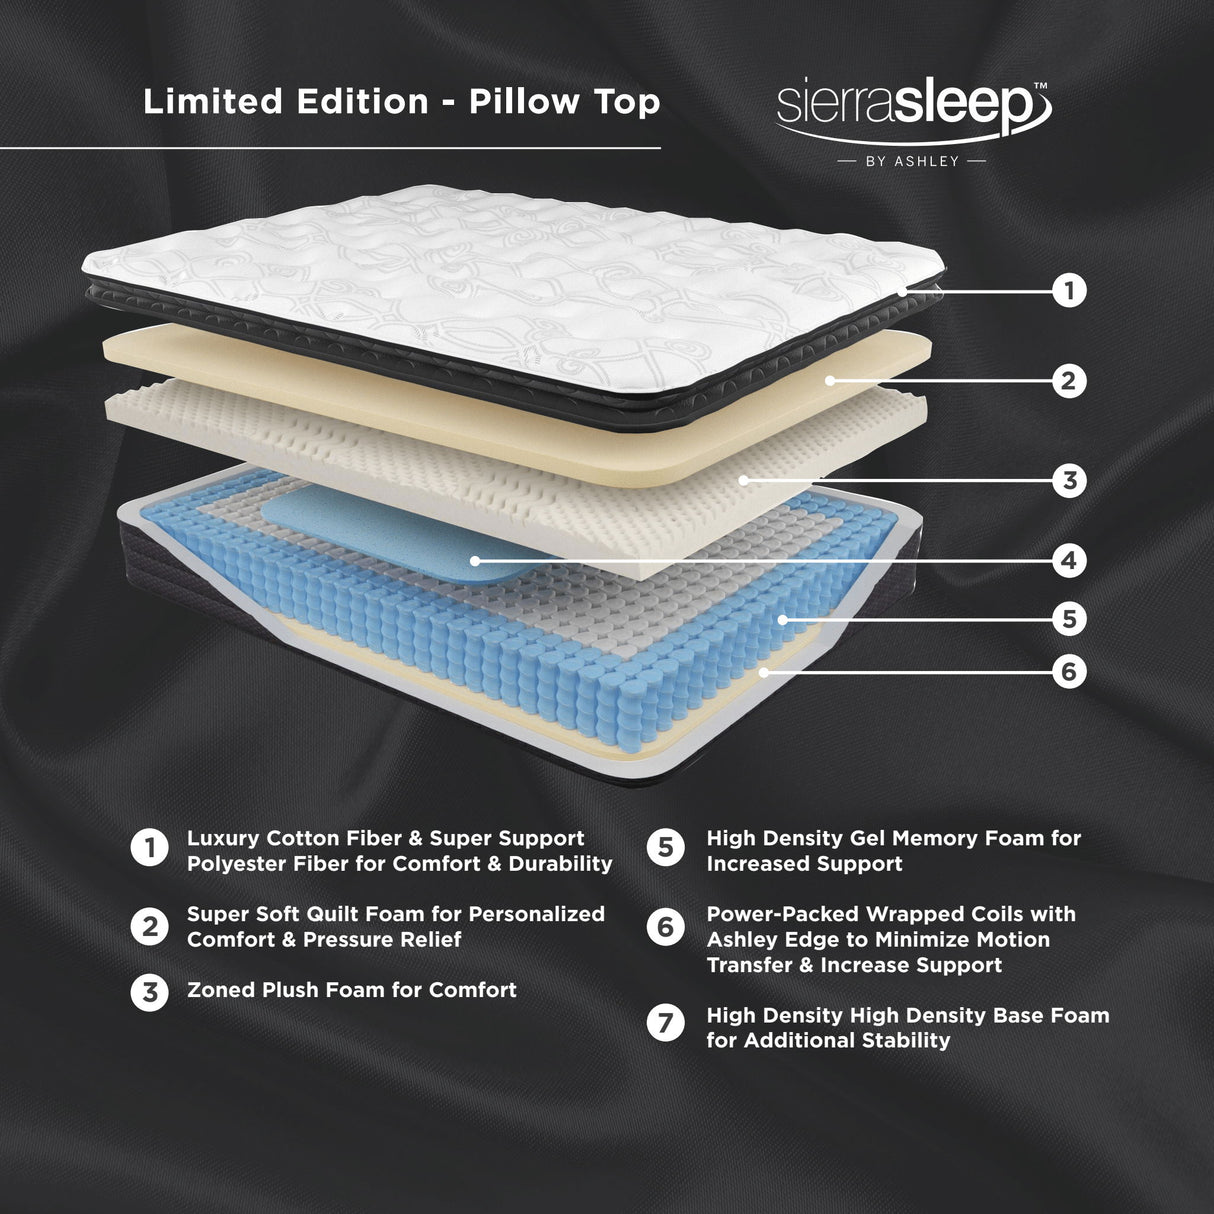 Limited Edition - Pillow Top Mattress, Base